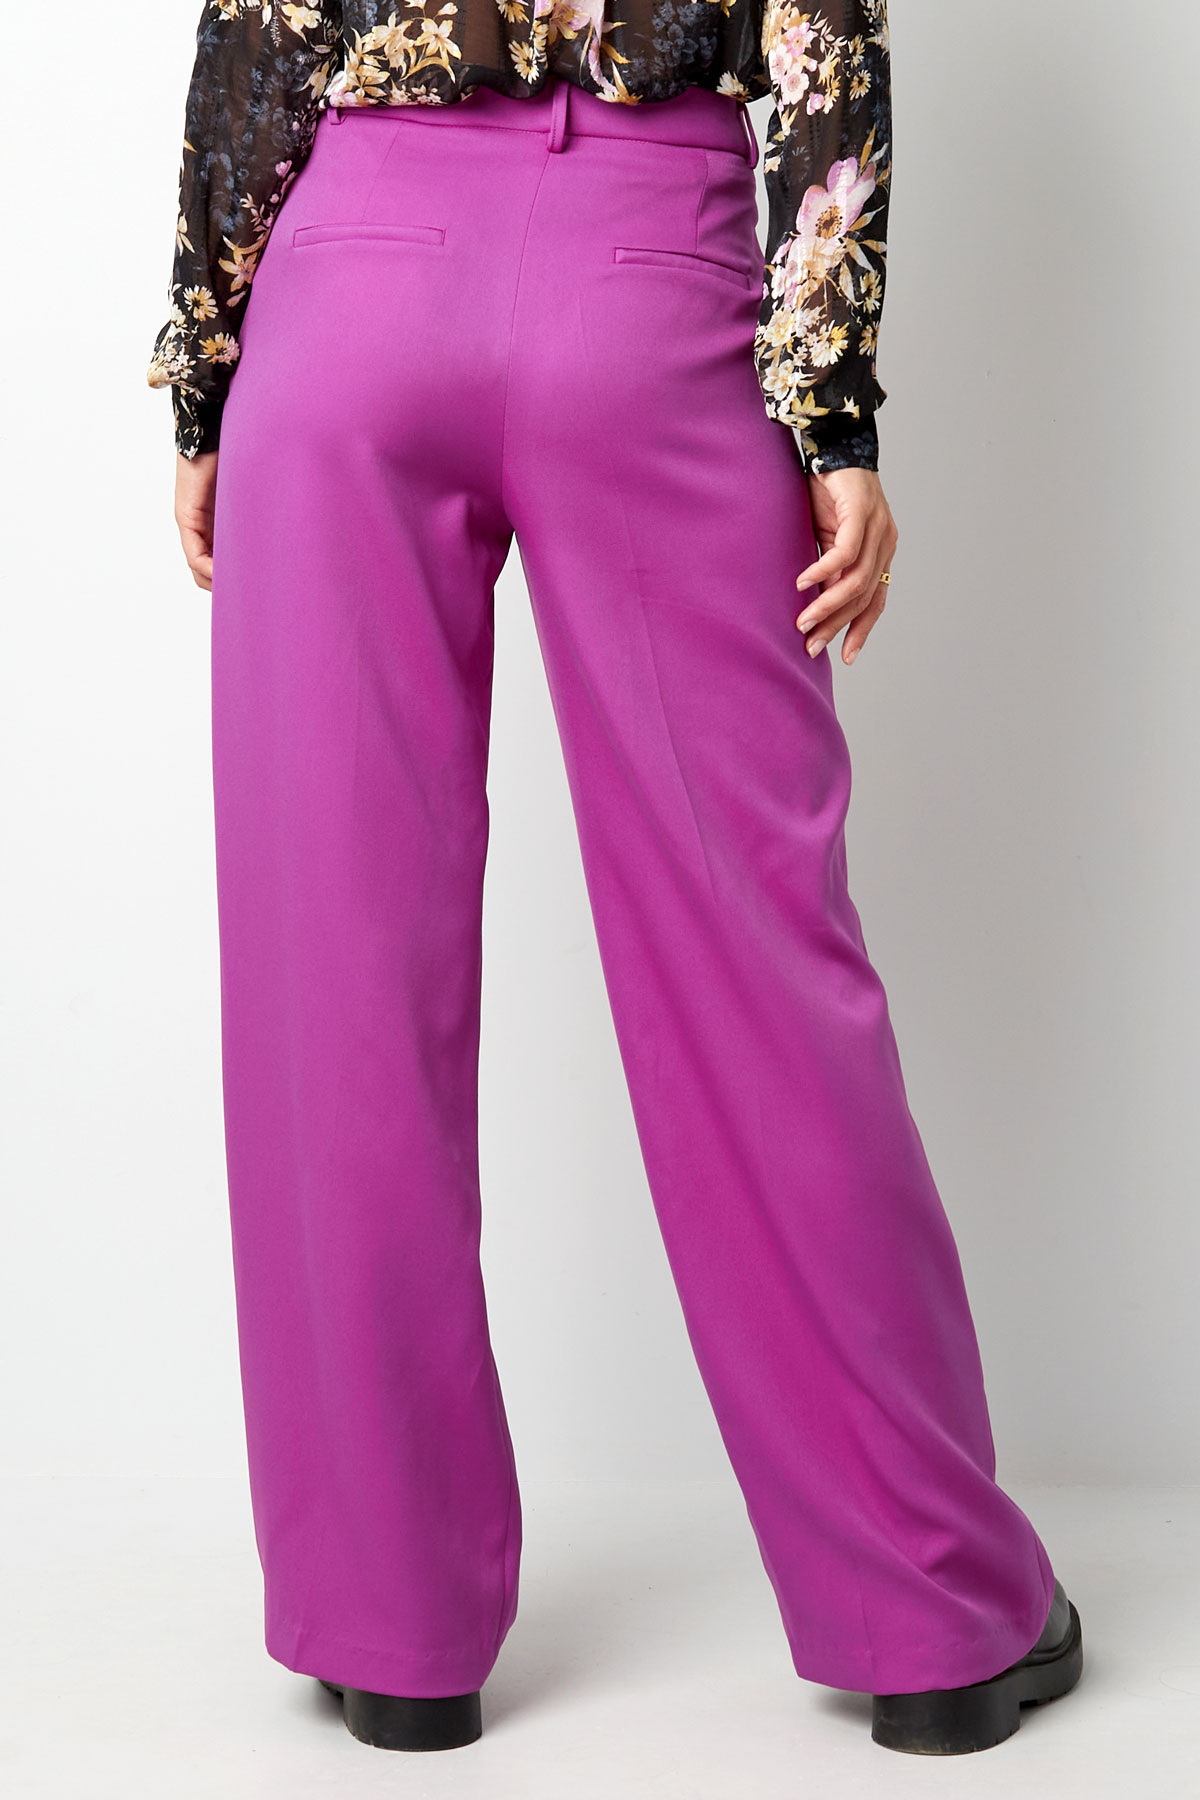 Pantalon plissé - violet h5 Image12